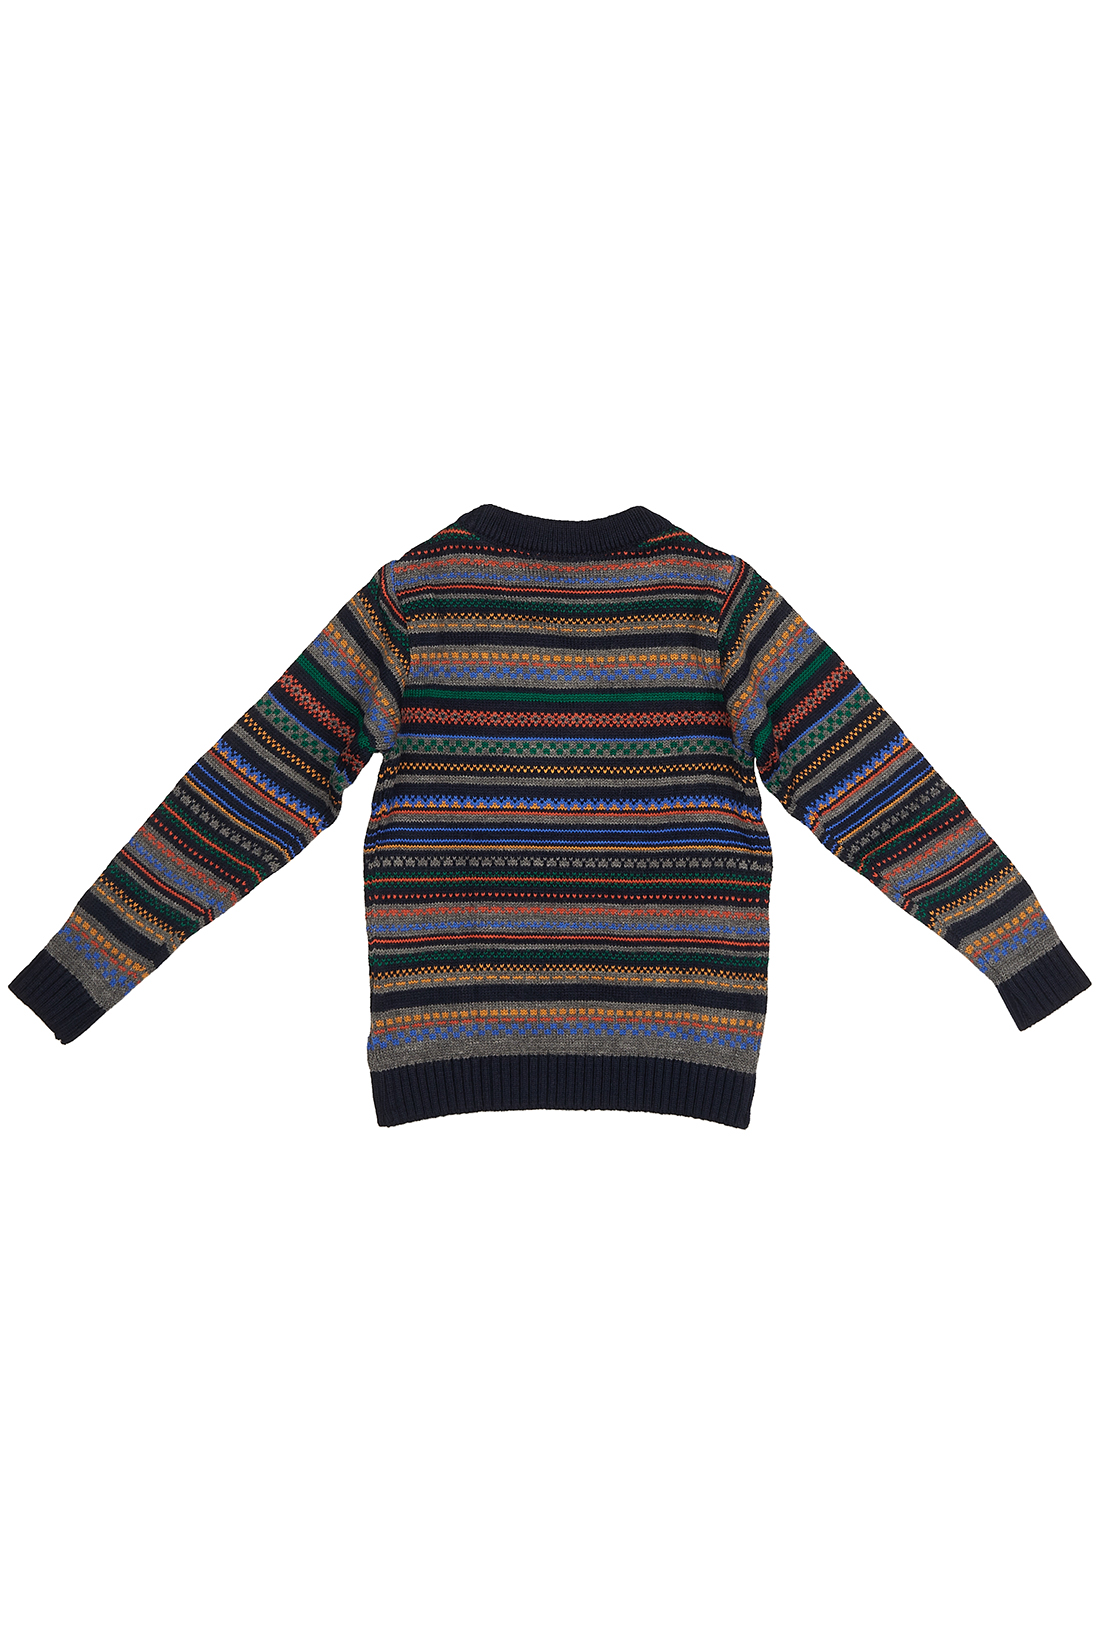 Джемпер для мальчика (арт. baon BK638504), размер 98-104, цвет multicolor#многоцветный Джемпер для мальчика (арт. baon BK638504) - фото 3